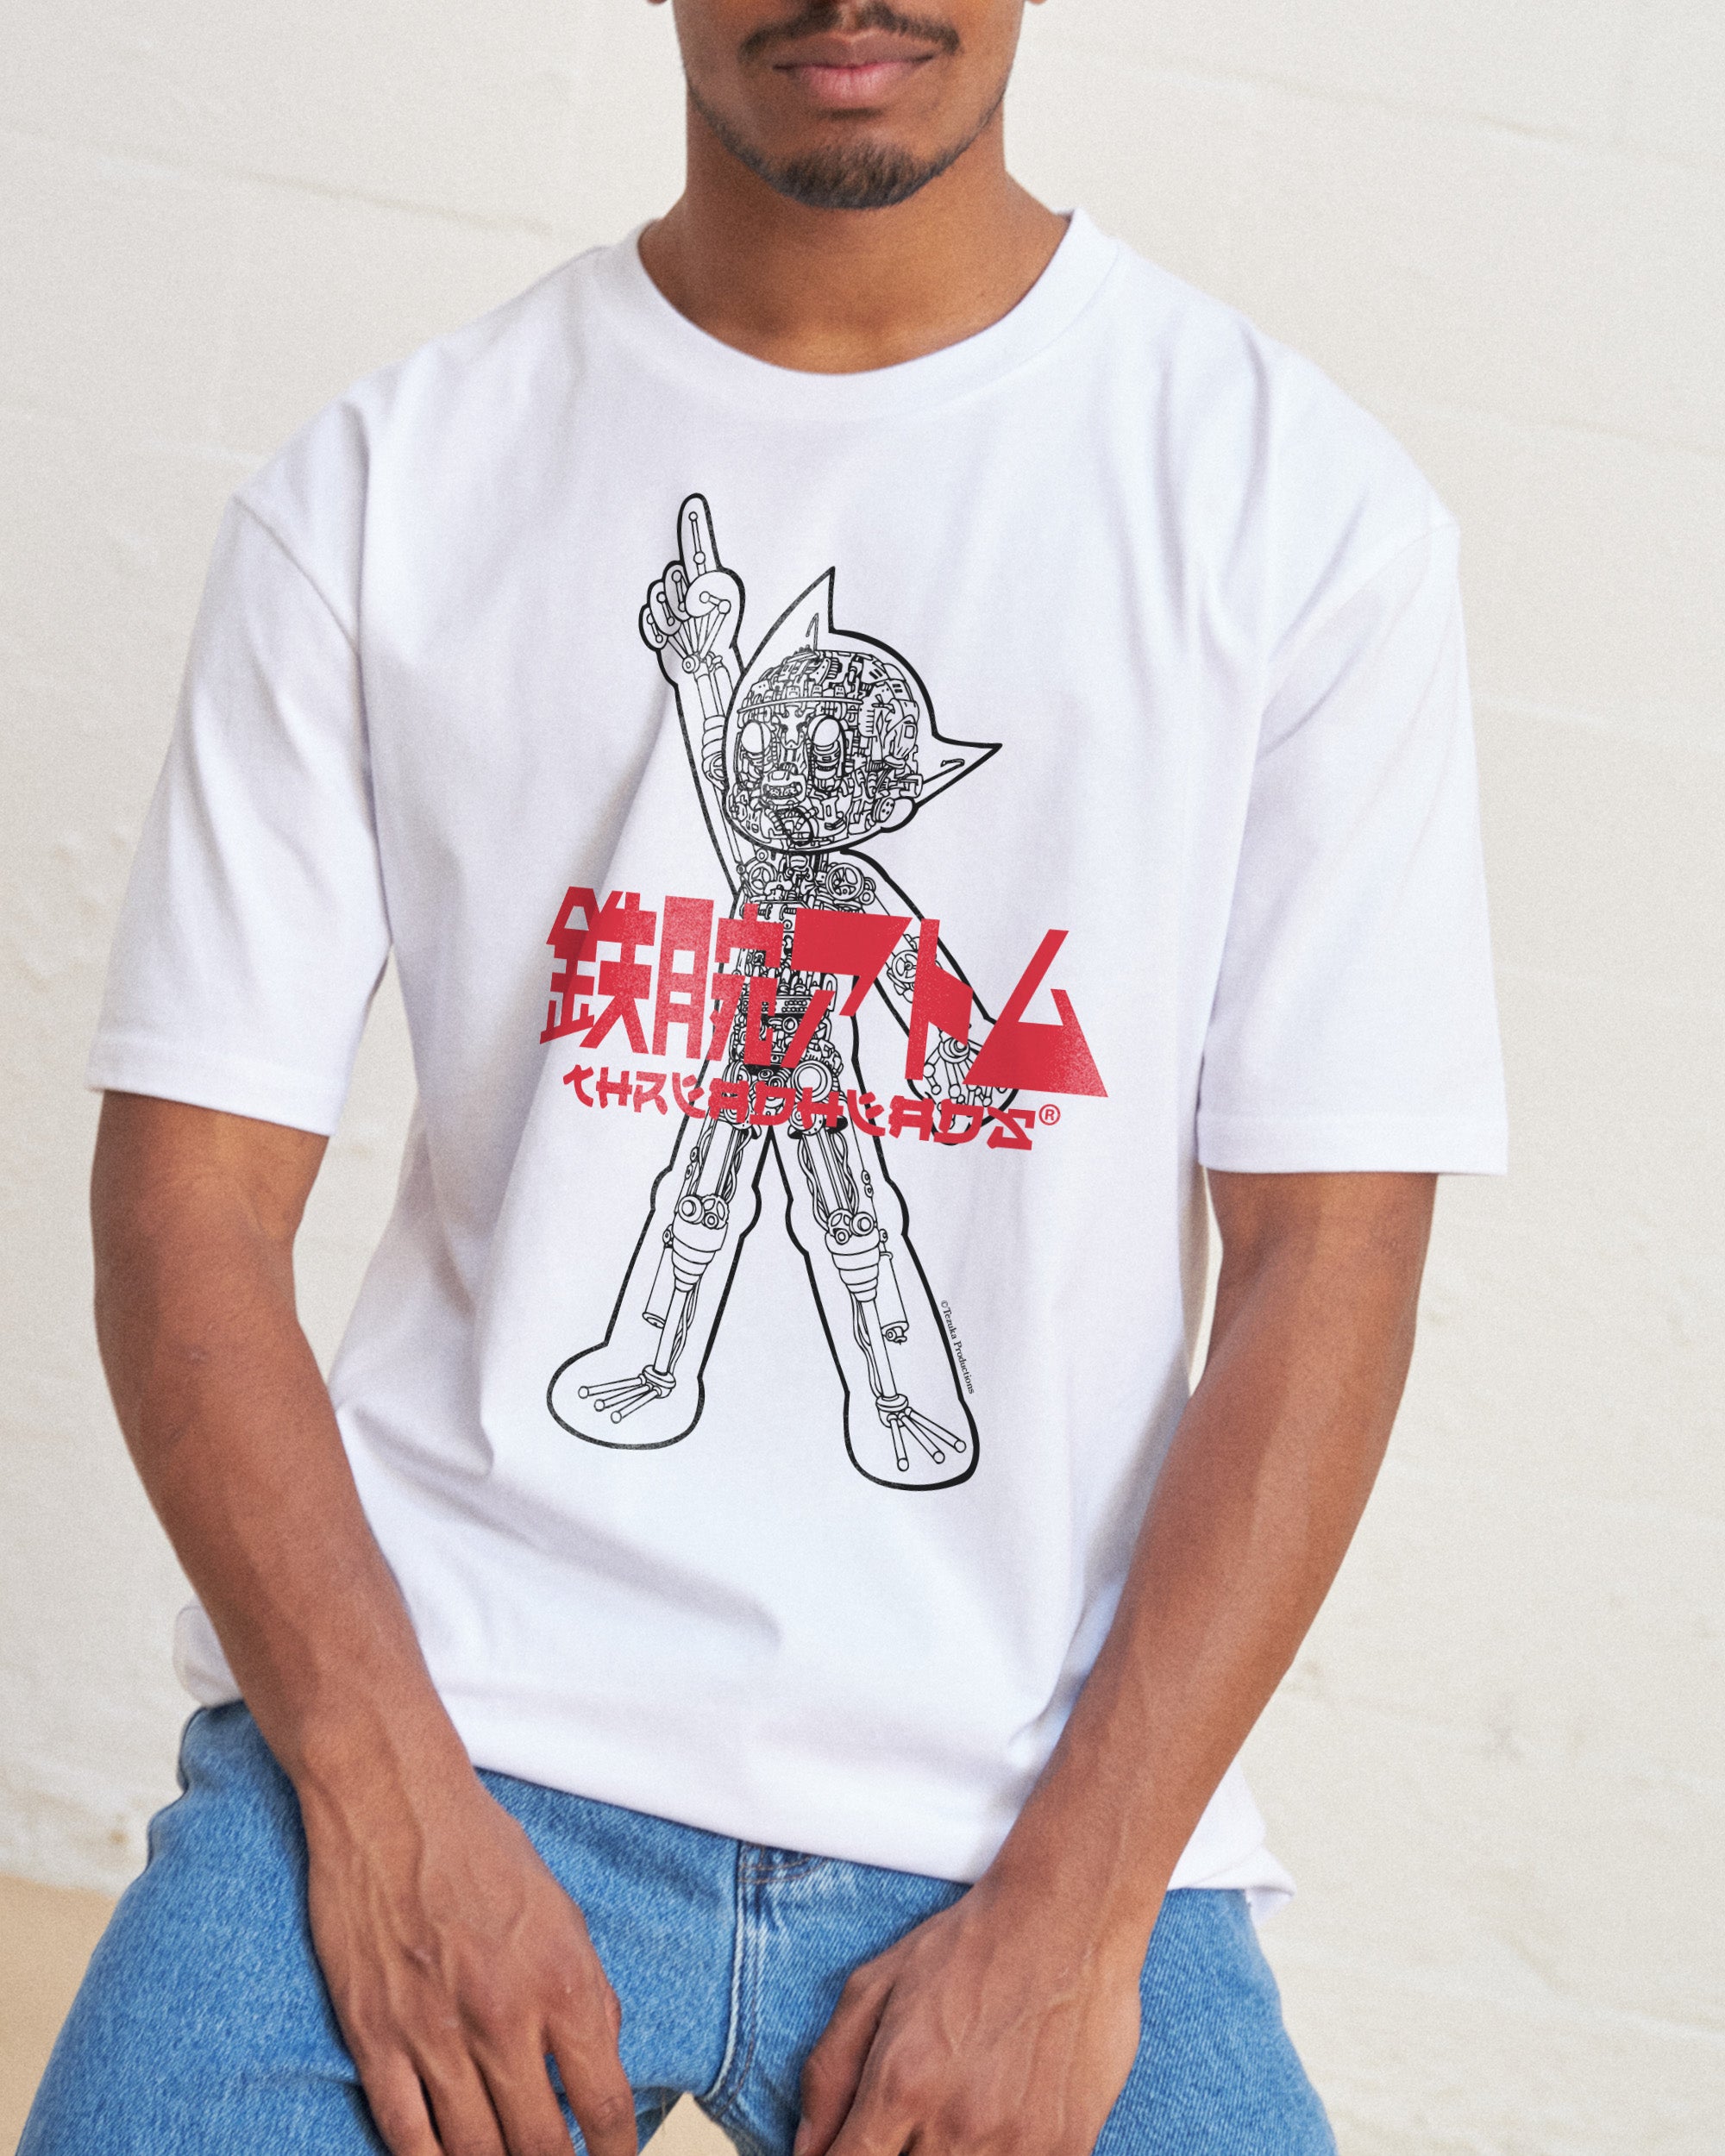 Astro Boy Intern-Mech T-Shirt